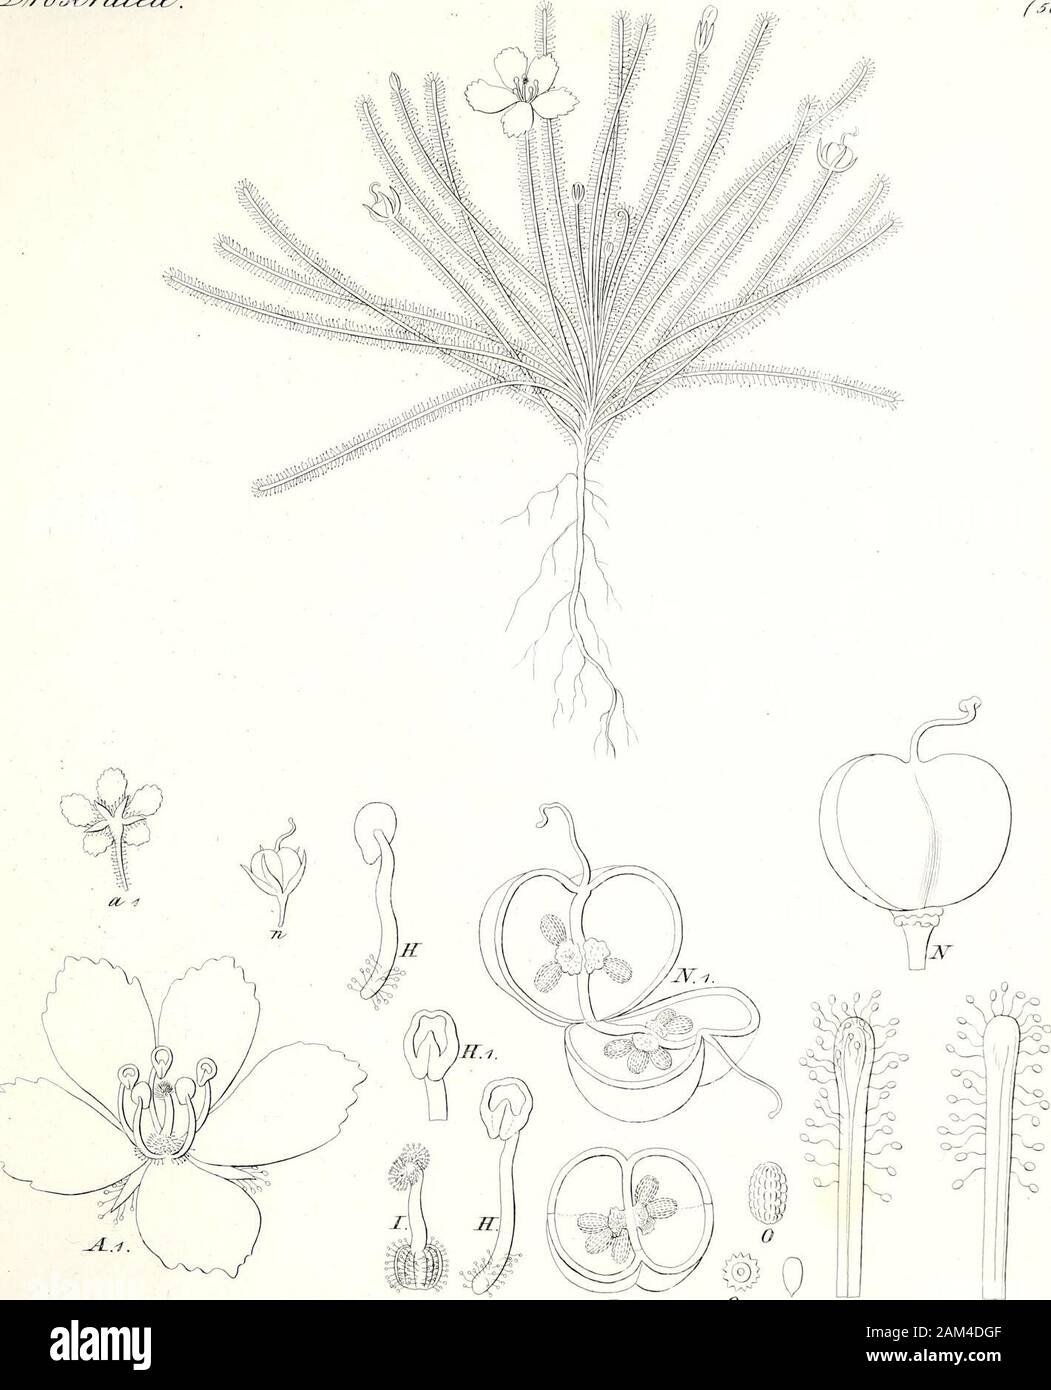 Iconographia generum Plantarum. & Dzd. (9^/&gt;/?t# &Yn und Aec £^ afa Jre&SLzs^C Sr. ///O M 9* £ KJ &?* € CCe&gt; 6e/,. f^OSjJ2T*: £ Y/AV^J&d&i/forete/. {Fioij IMotlecceee. Stockfoto